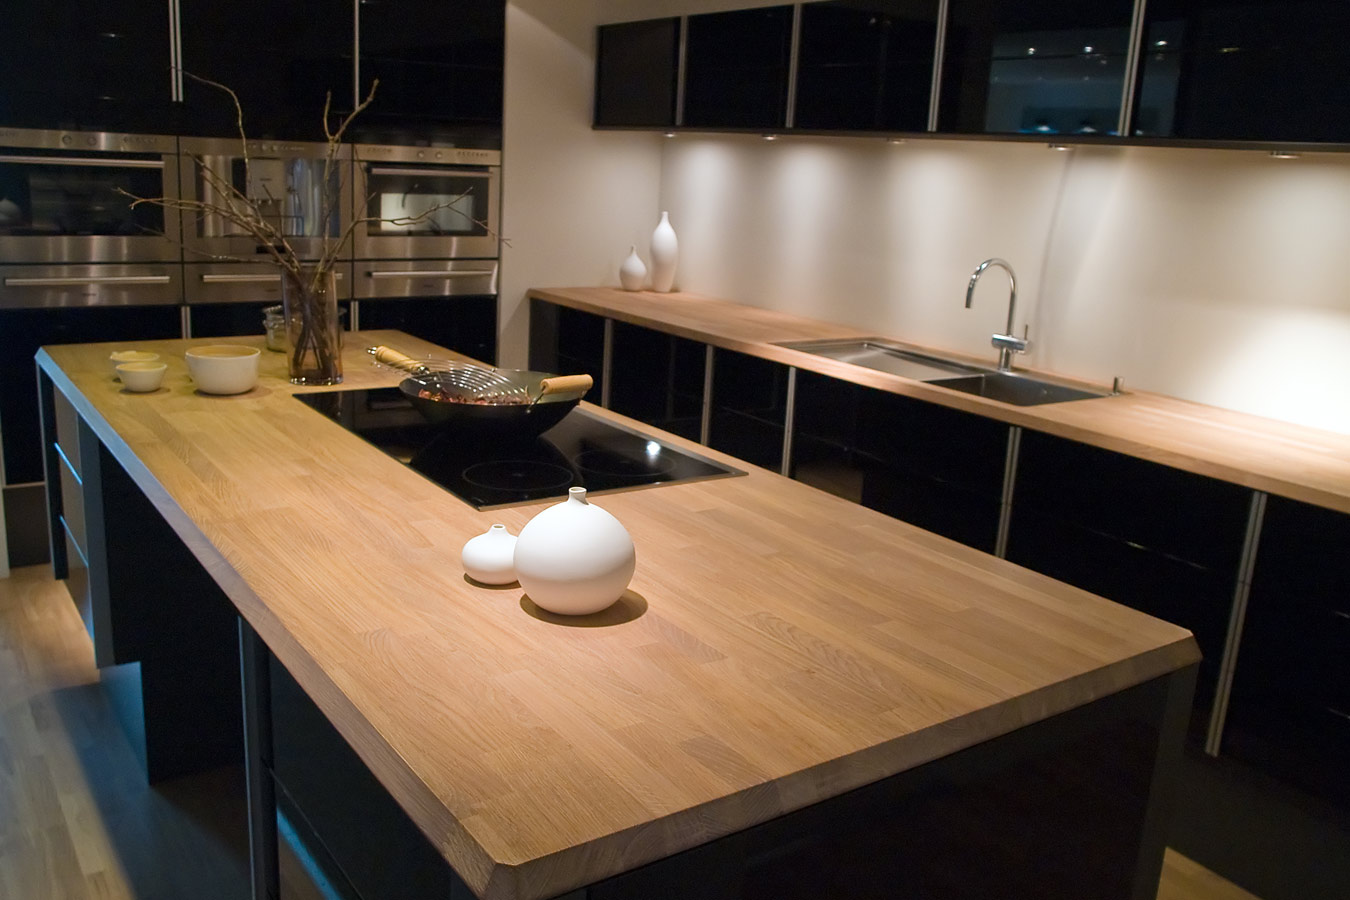 Donkere keukenkasten met houten werkblad